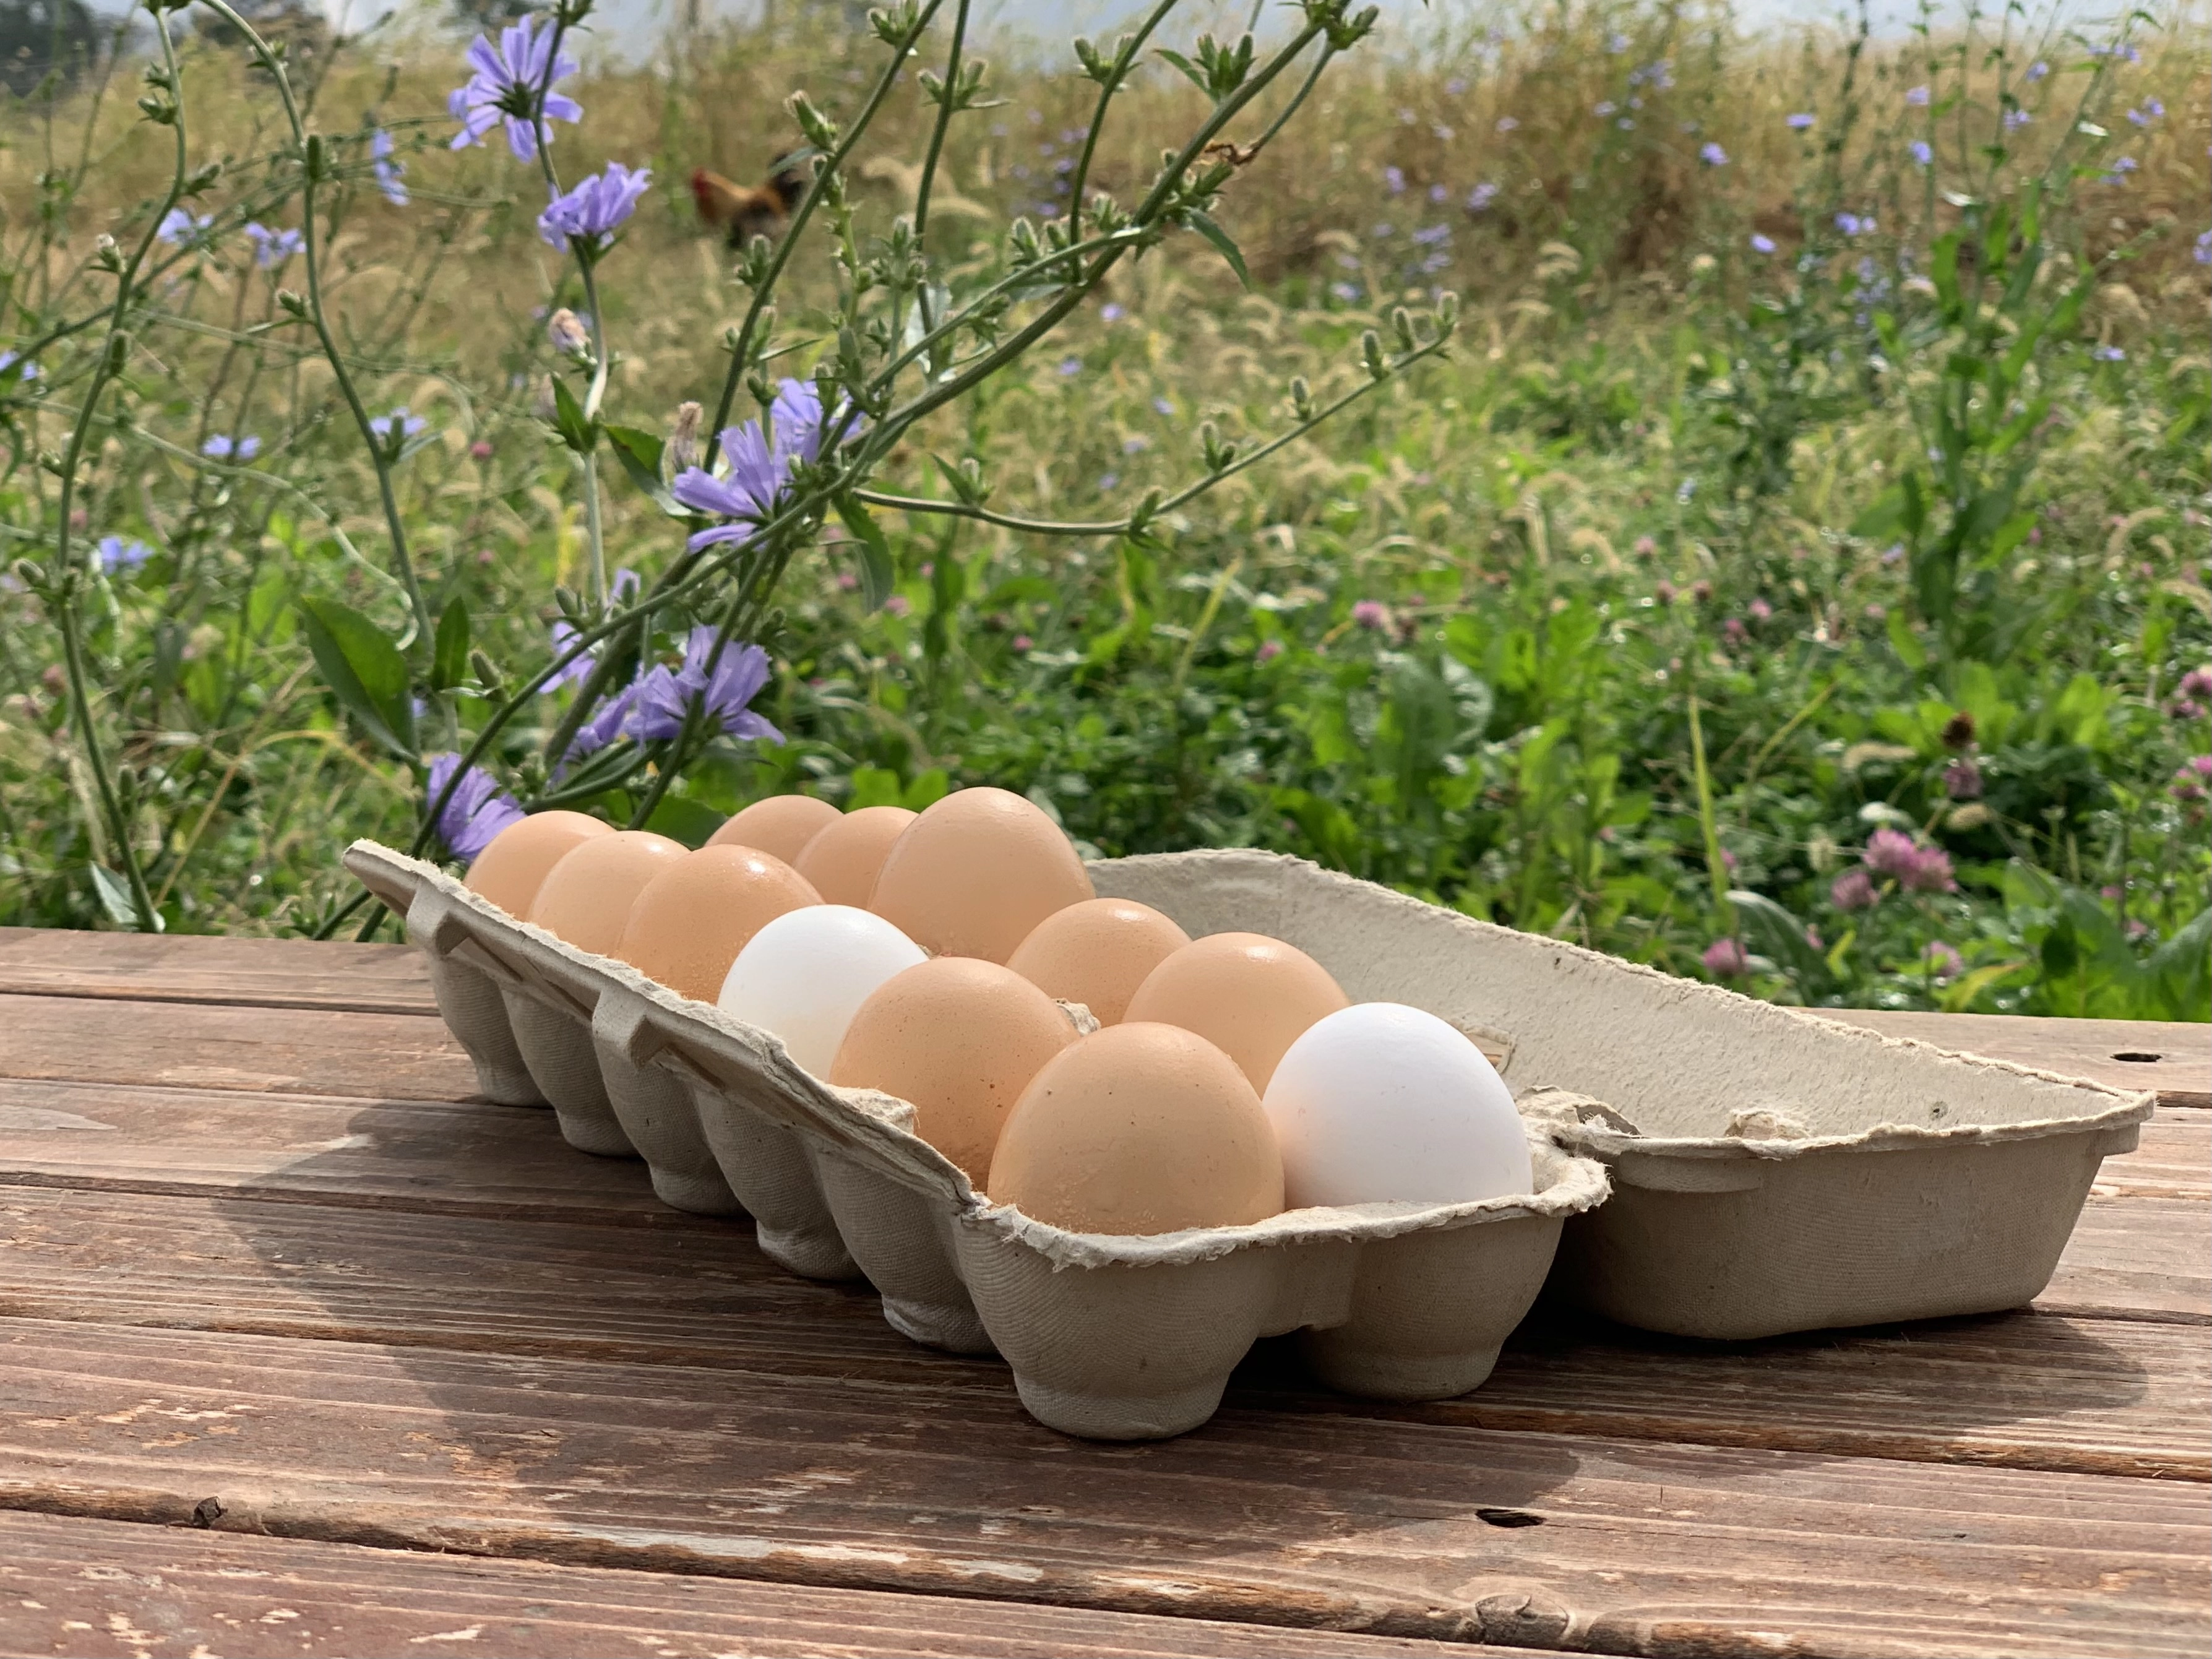 pasture-raised-chicken-eggs-3